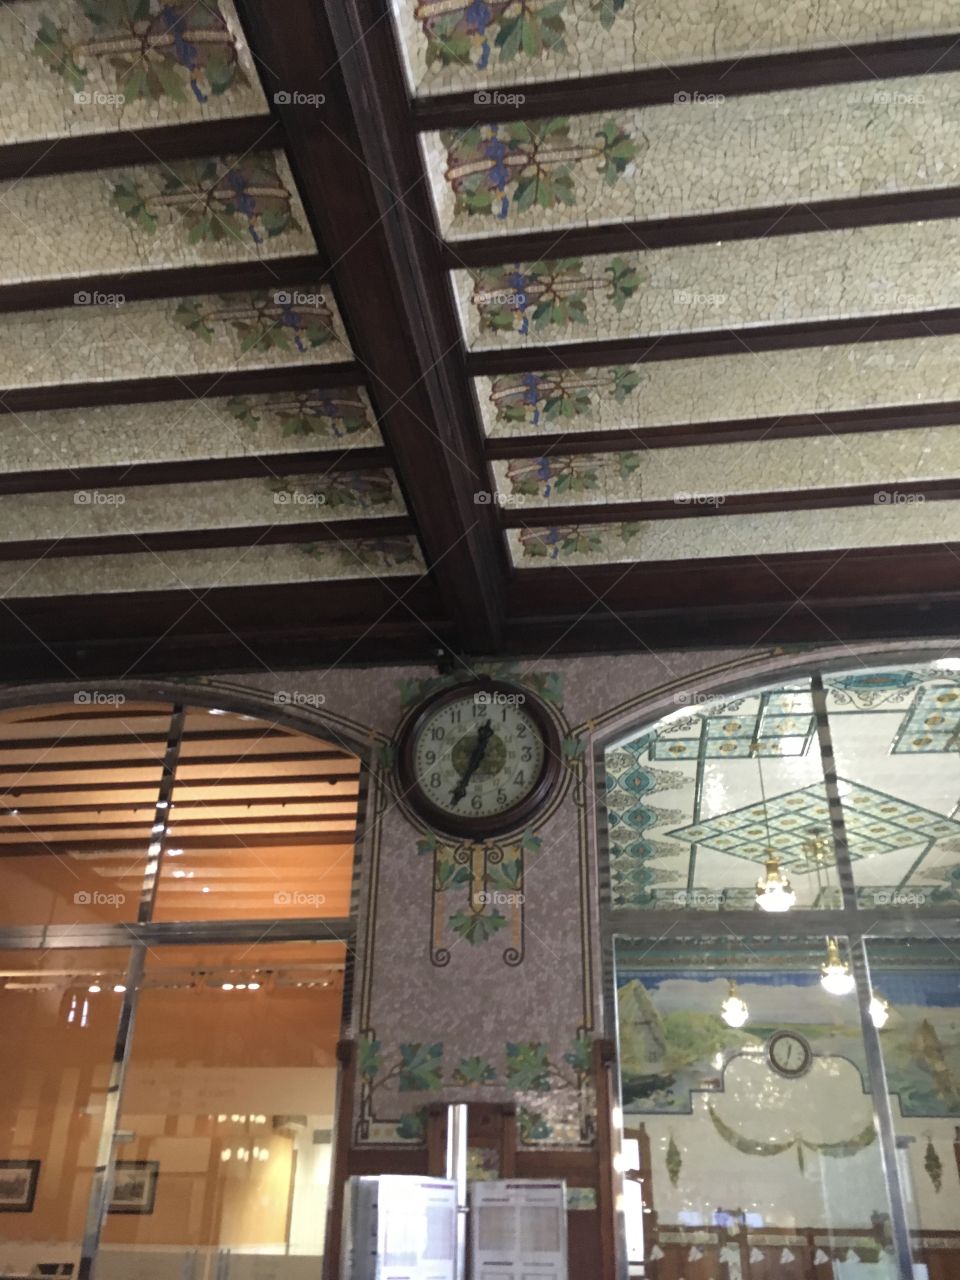 Clock in the train station, Valencia Spain